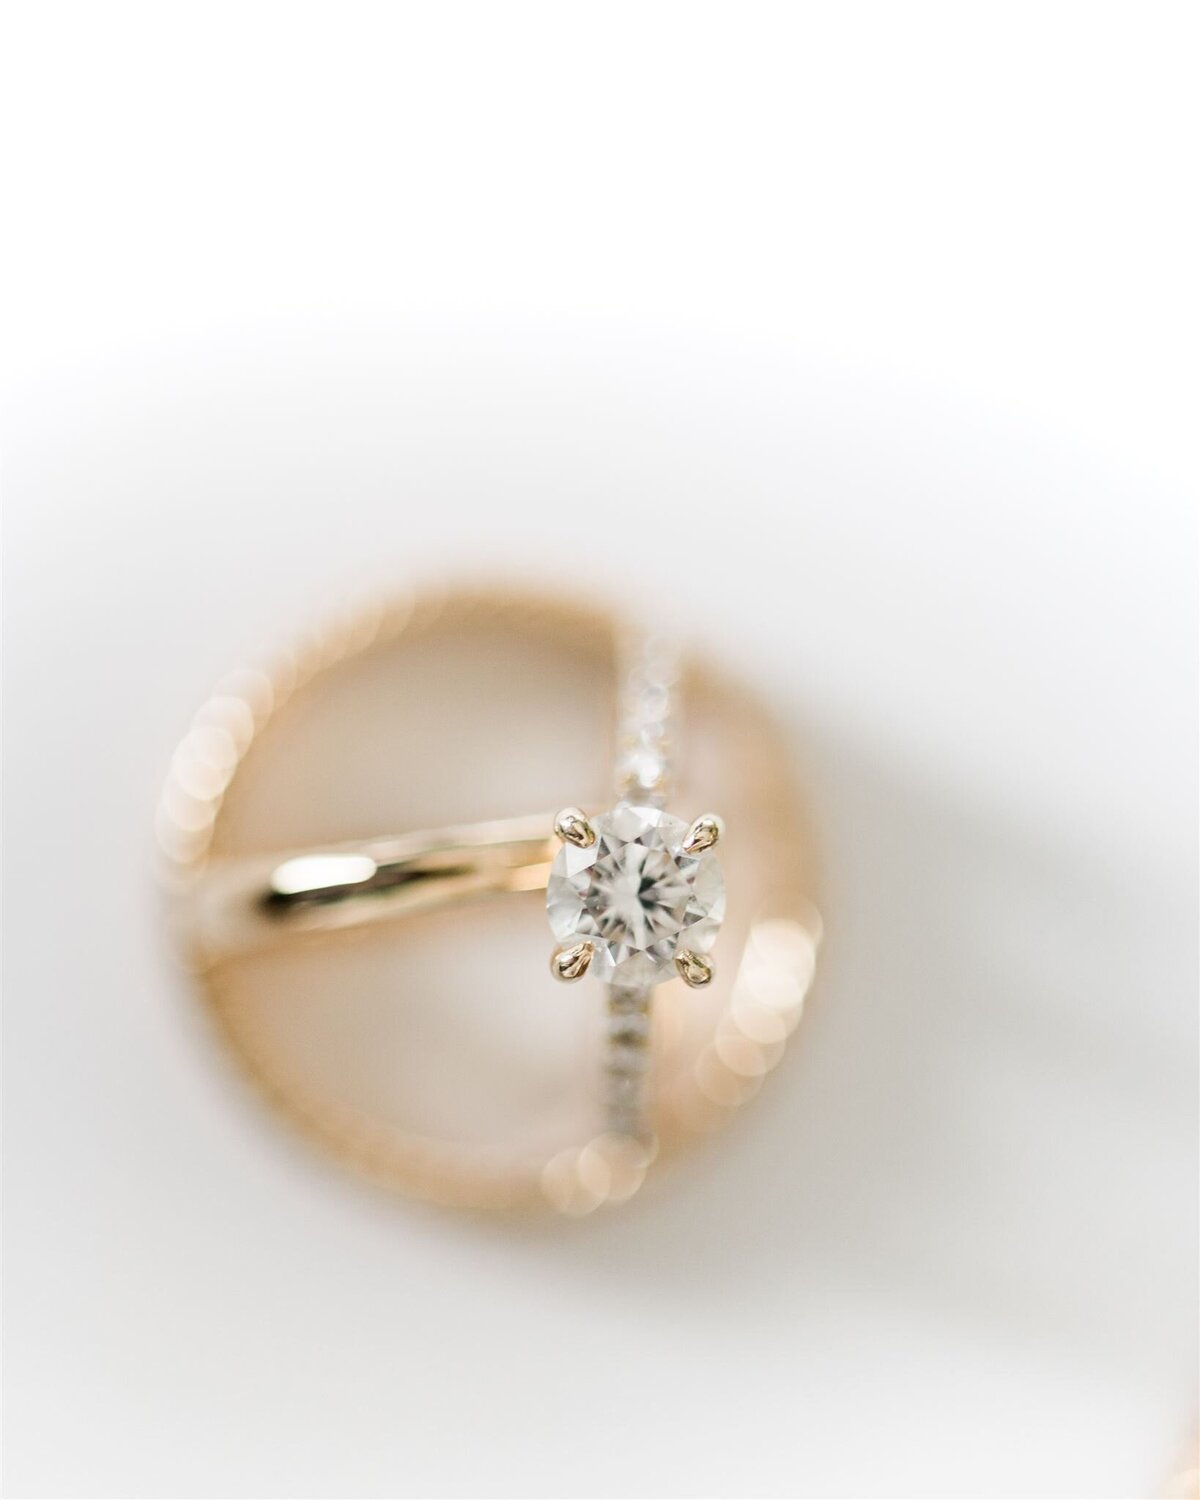 Cape Breton Wedding  Photographer CDM Photography takes photo of wedding rings stacked together